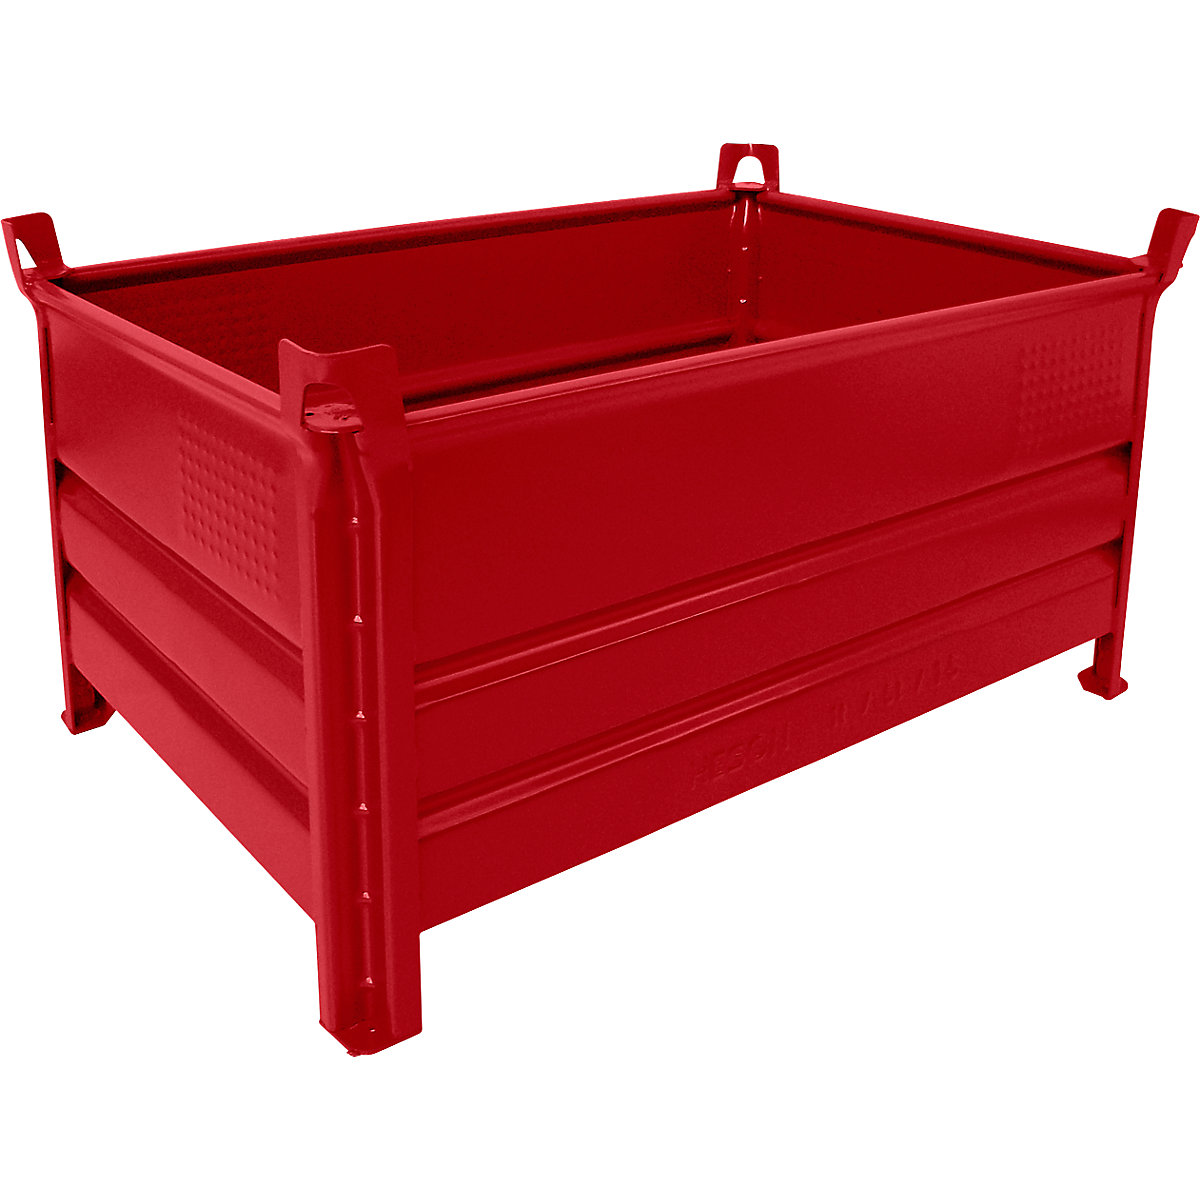 Heson Vollwand-Stapelbehälter, BxL 800 x 1200 mm, Traglast 500 kg, rot, ab 1 Stk